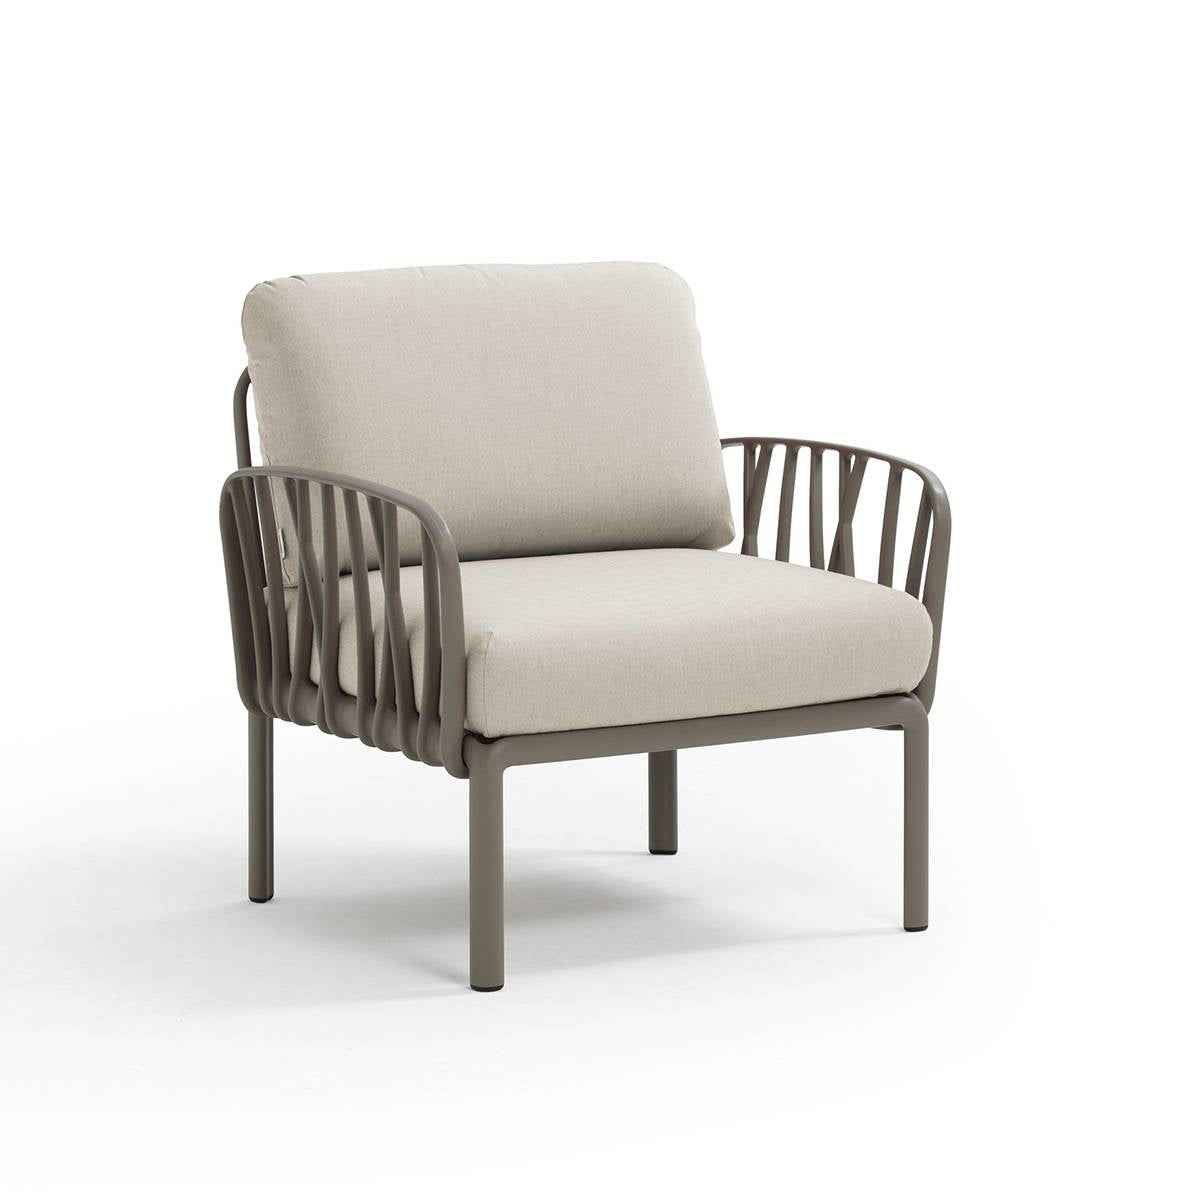 Komodo armchair in fiberglass resin - Nardi